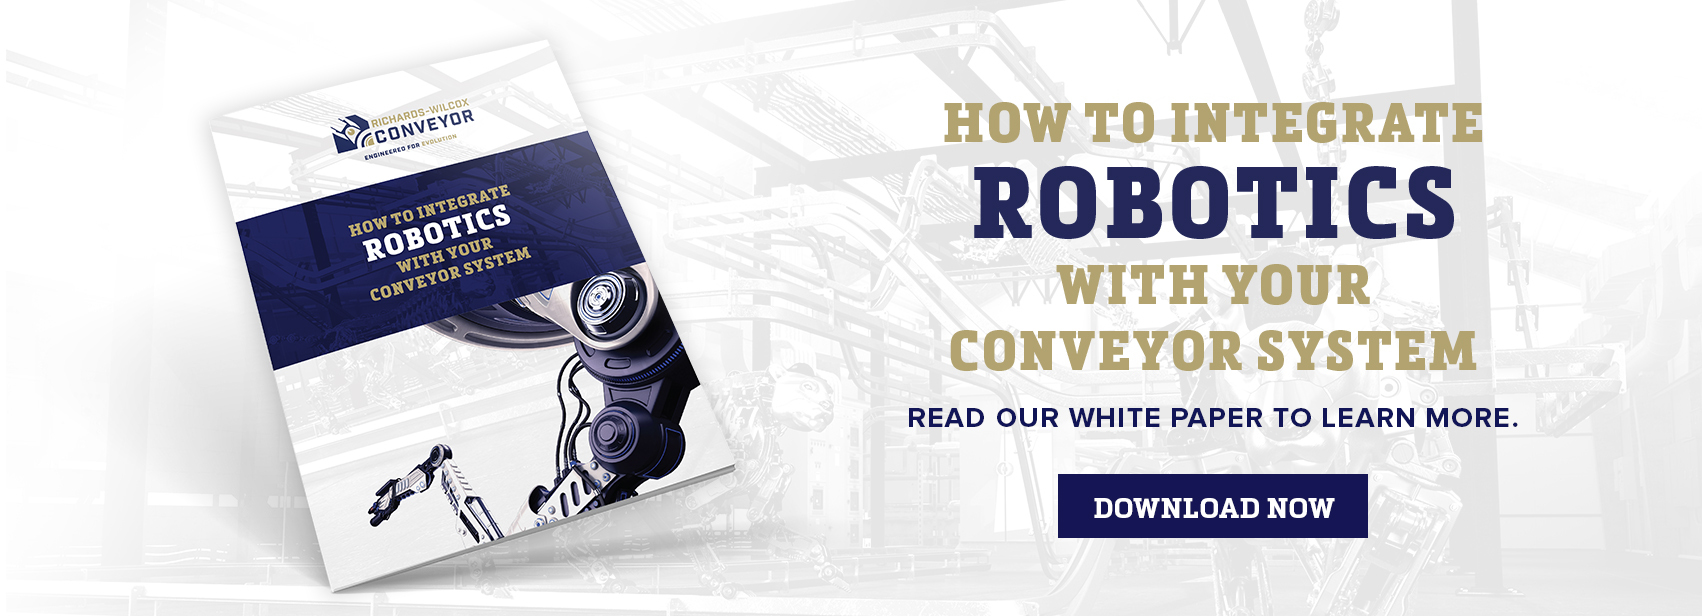 robotics integration whitepaper